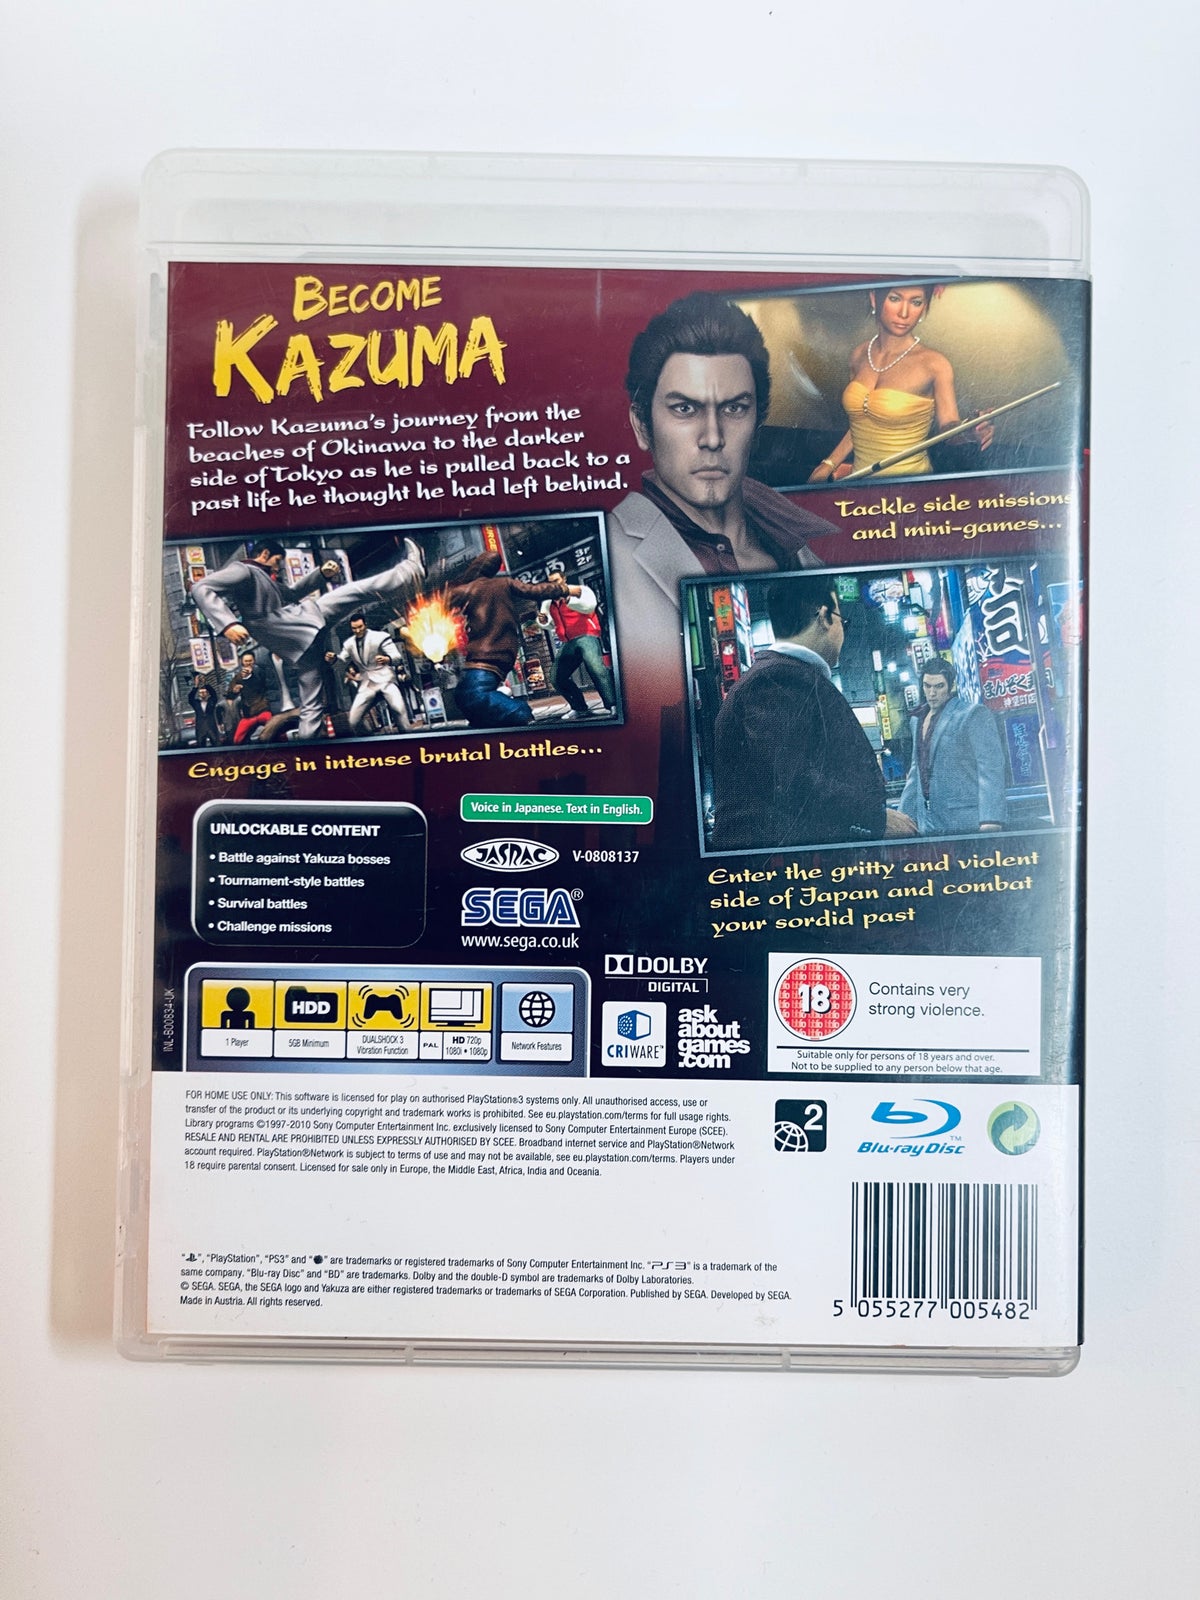 Yakuza 3 med bonus disc, Playstation 3, PS3